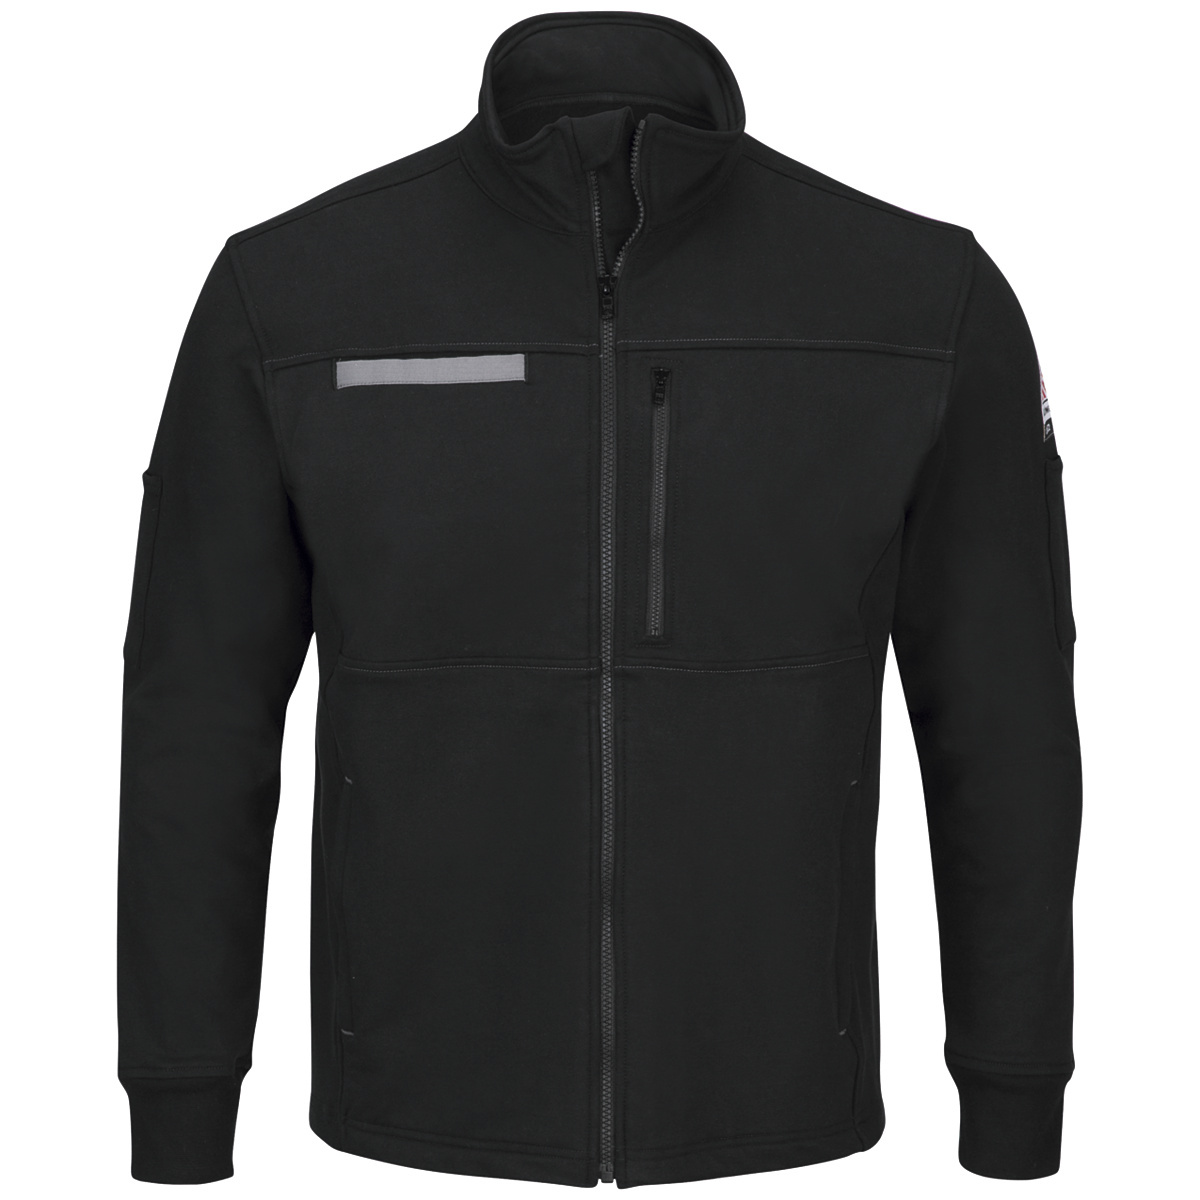 Bulwark® Large Regular Black Cotton/Spandex Flame Resistant Jacket With Zipper Front Closure